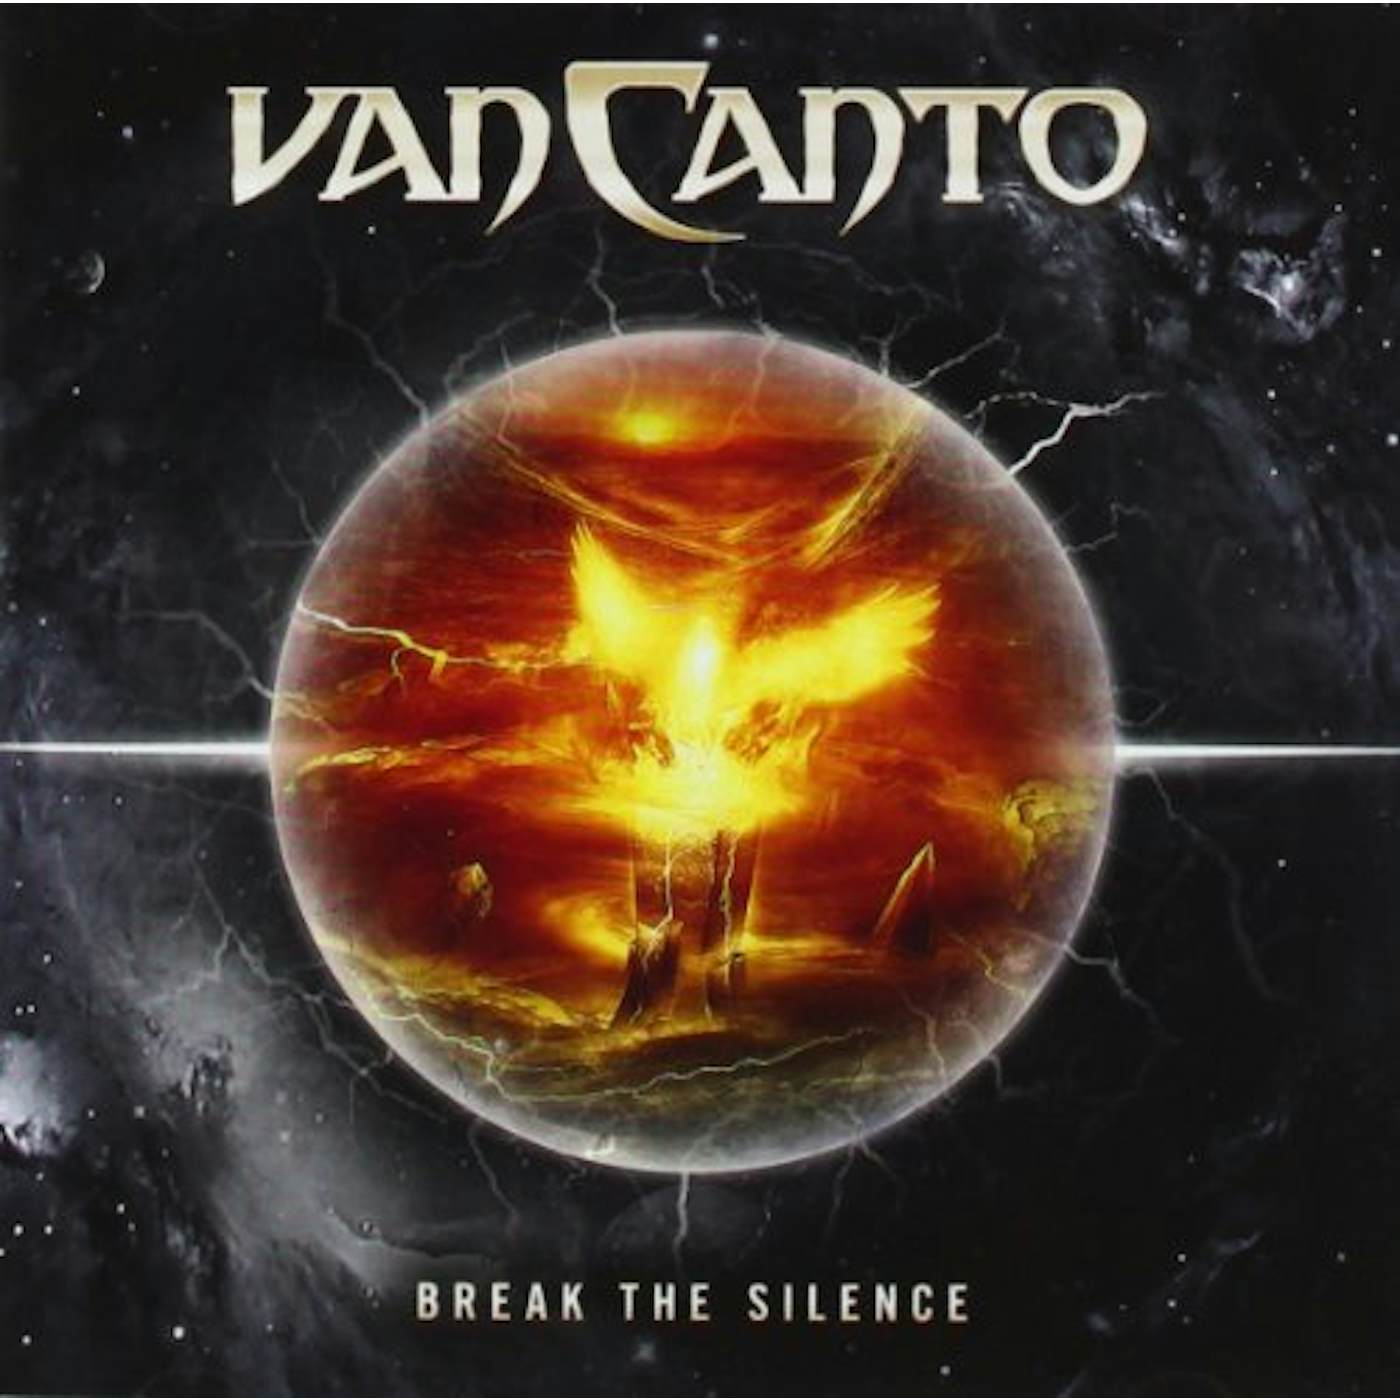 Van Canto BREAK THE SILENCE CD